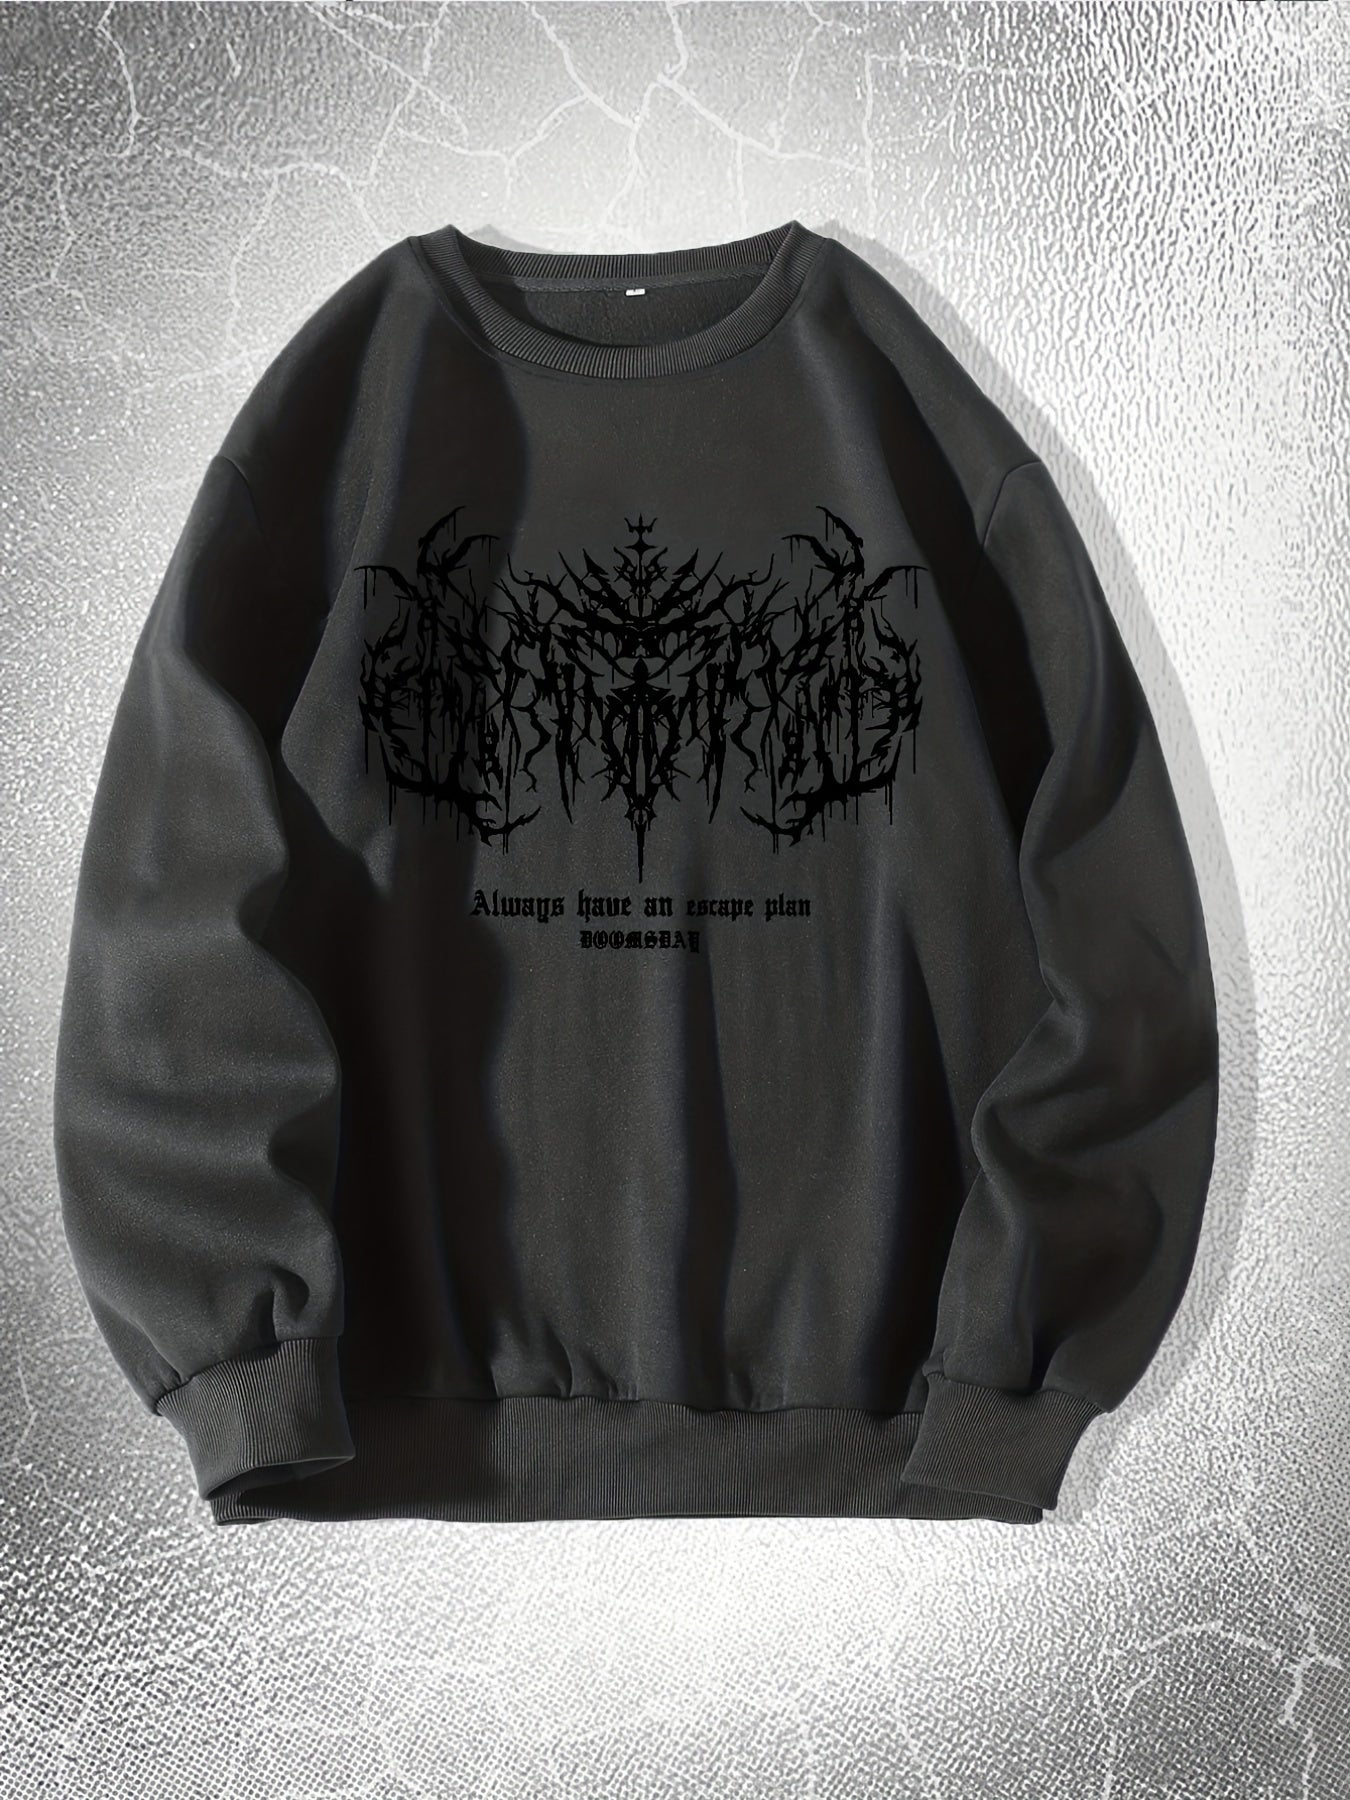 Vzyzv y2k Skeleton & Thorns Print Sweatshirt, Men's Casual Graphic Design Middle Stretch Crew Neck Pullover Sweatshirt For Autumn Winter